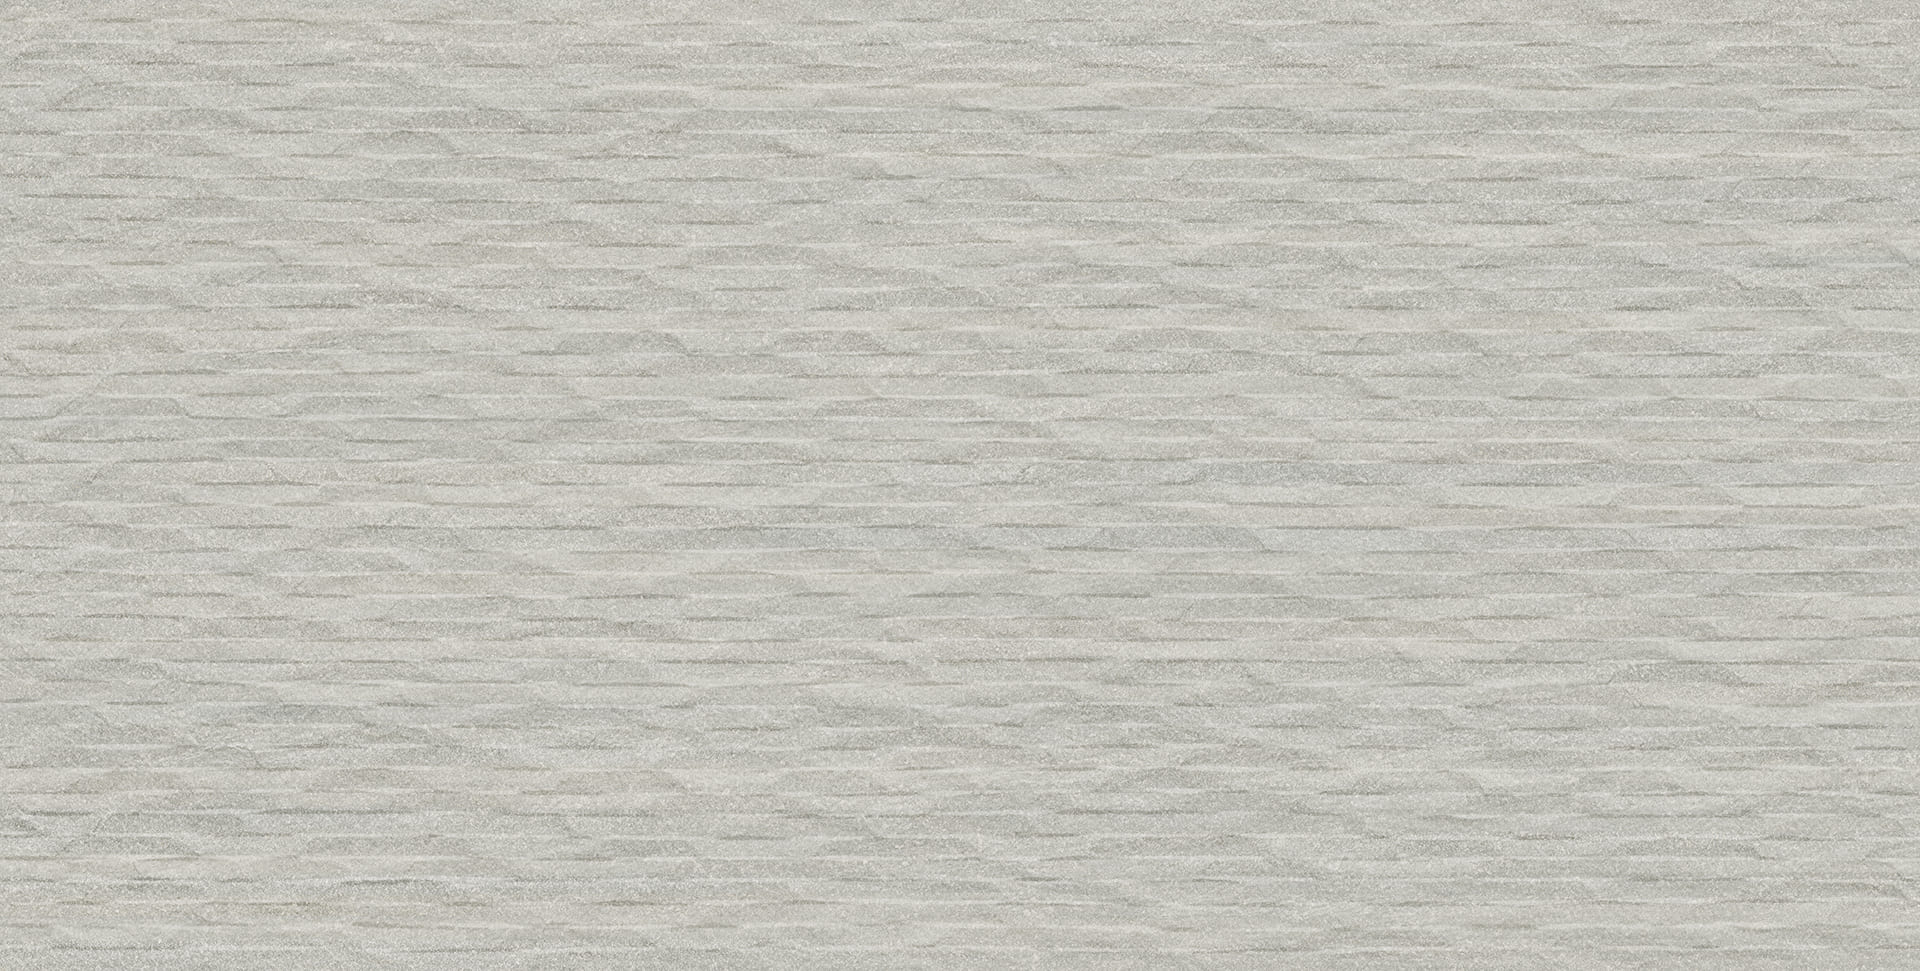 Elegance Pro: Mural Grey Wall Tile (24"x48"x9.5-mm | matte)